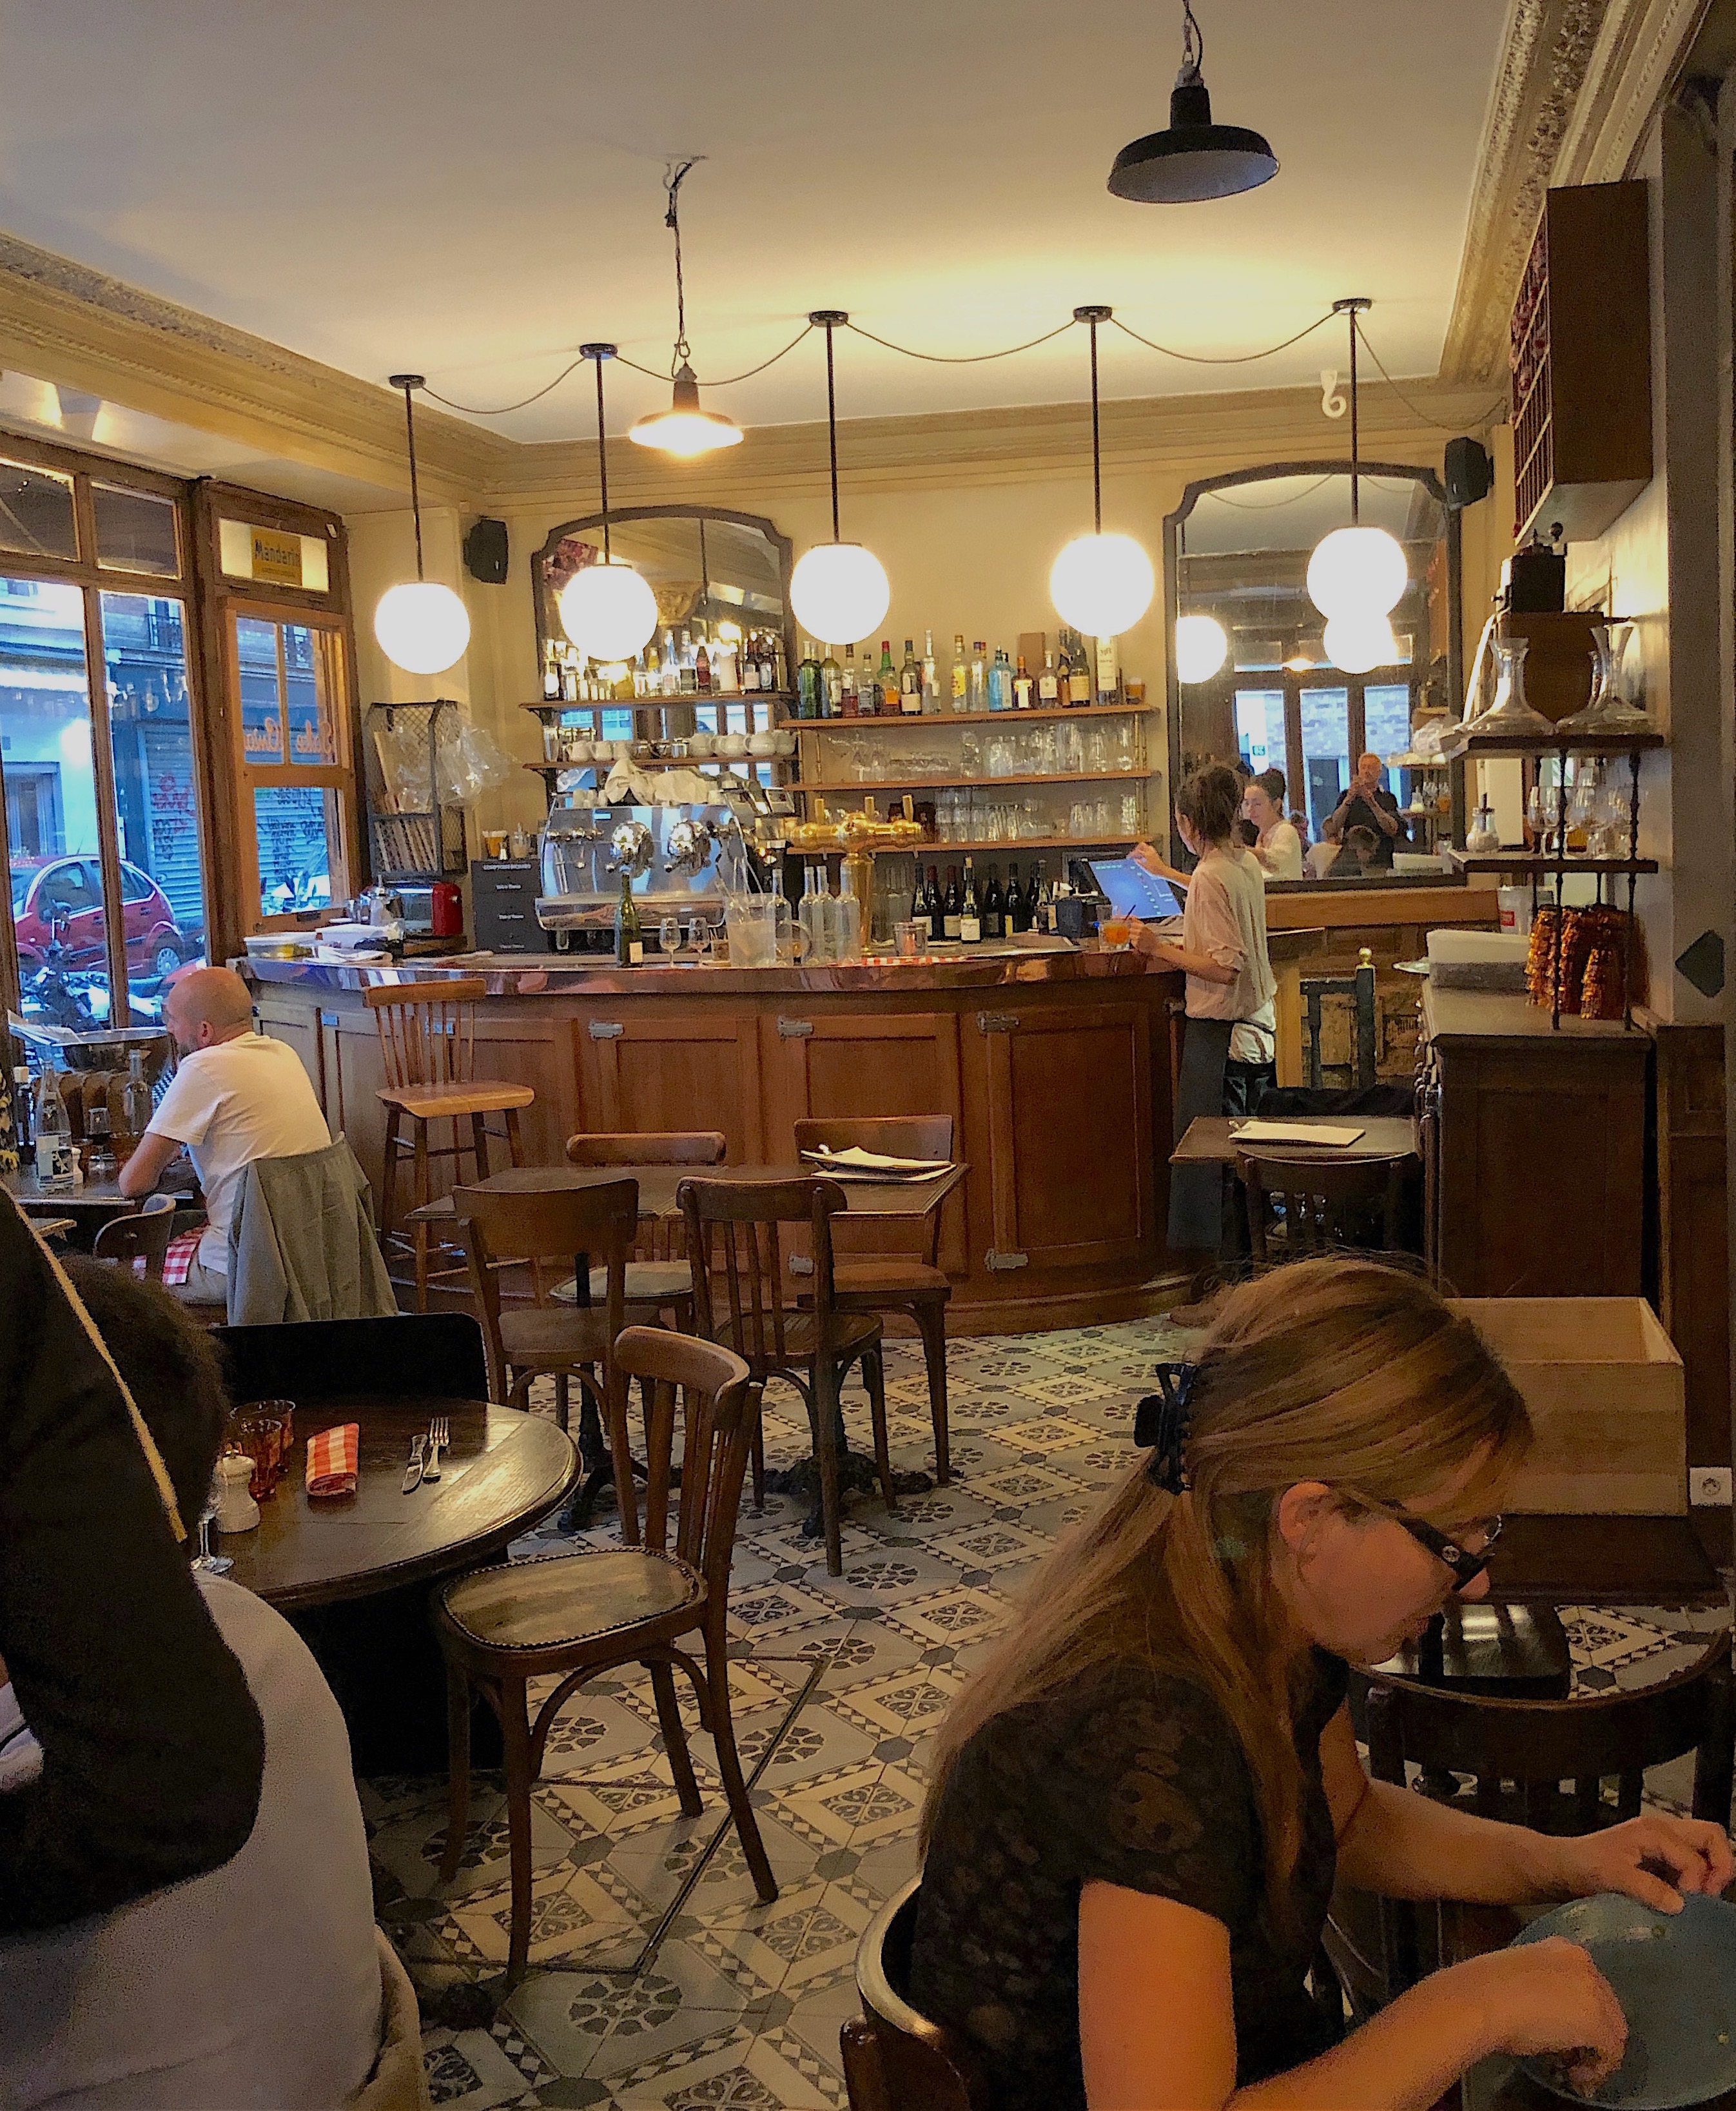 LE CAFE DU COIN, Paris - Madeleine - Menu, Prices, Restaurant